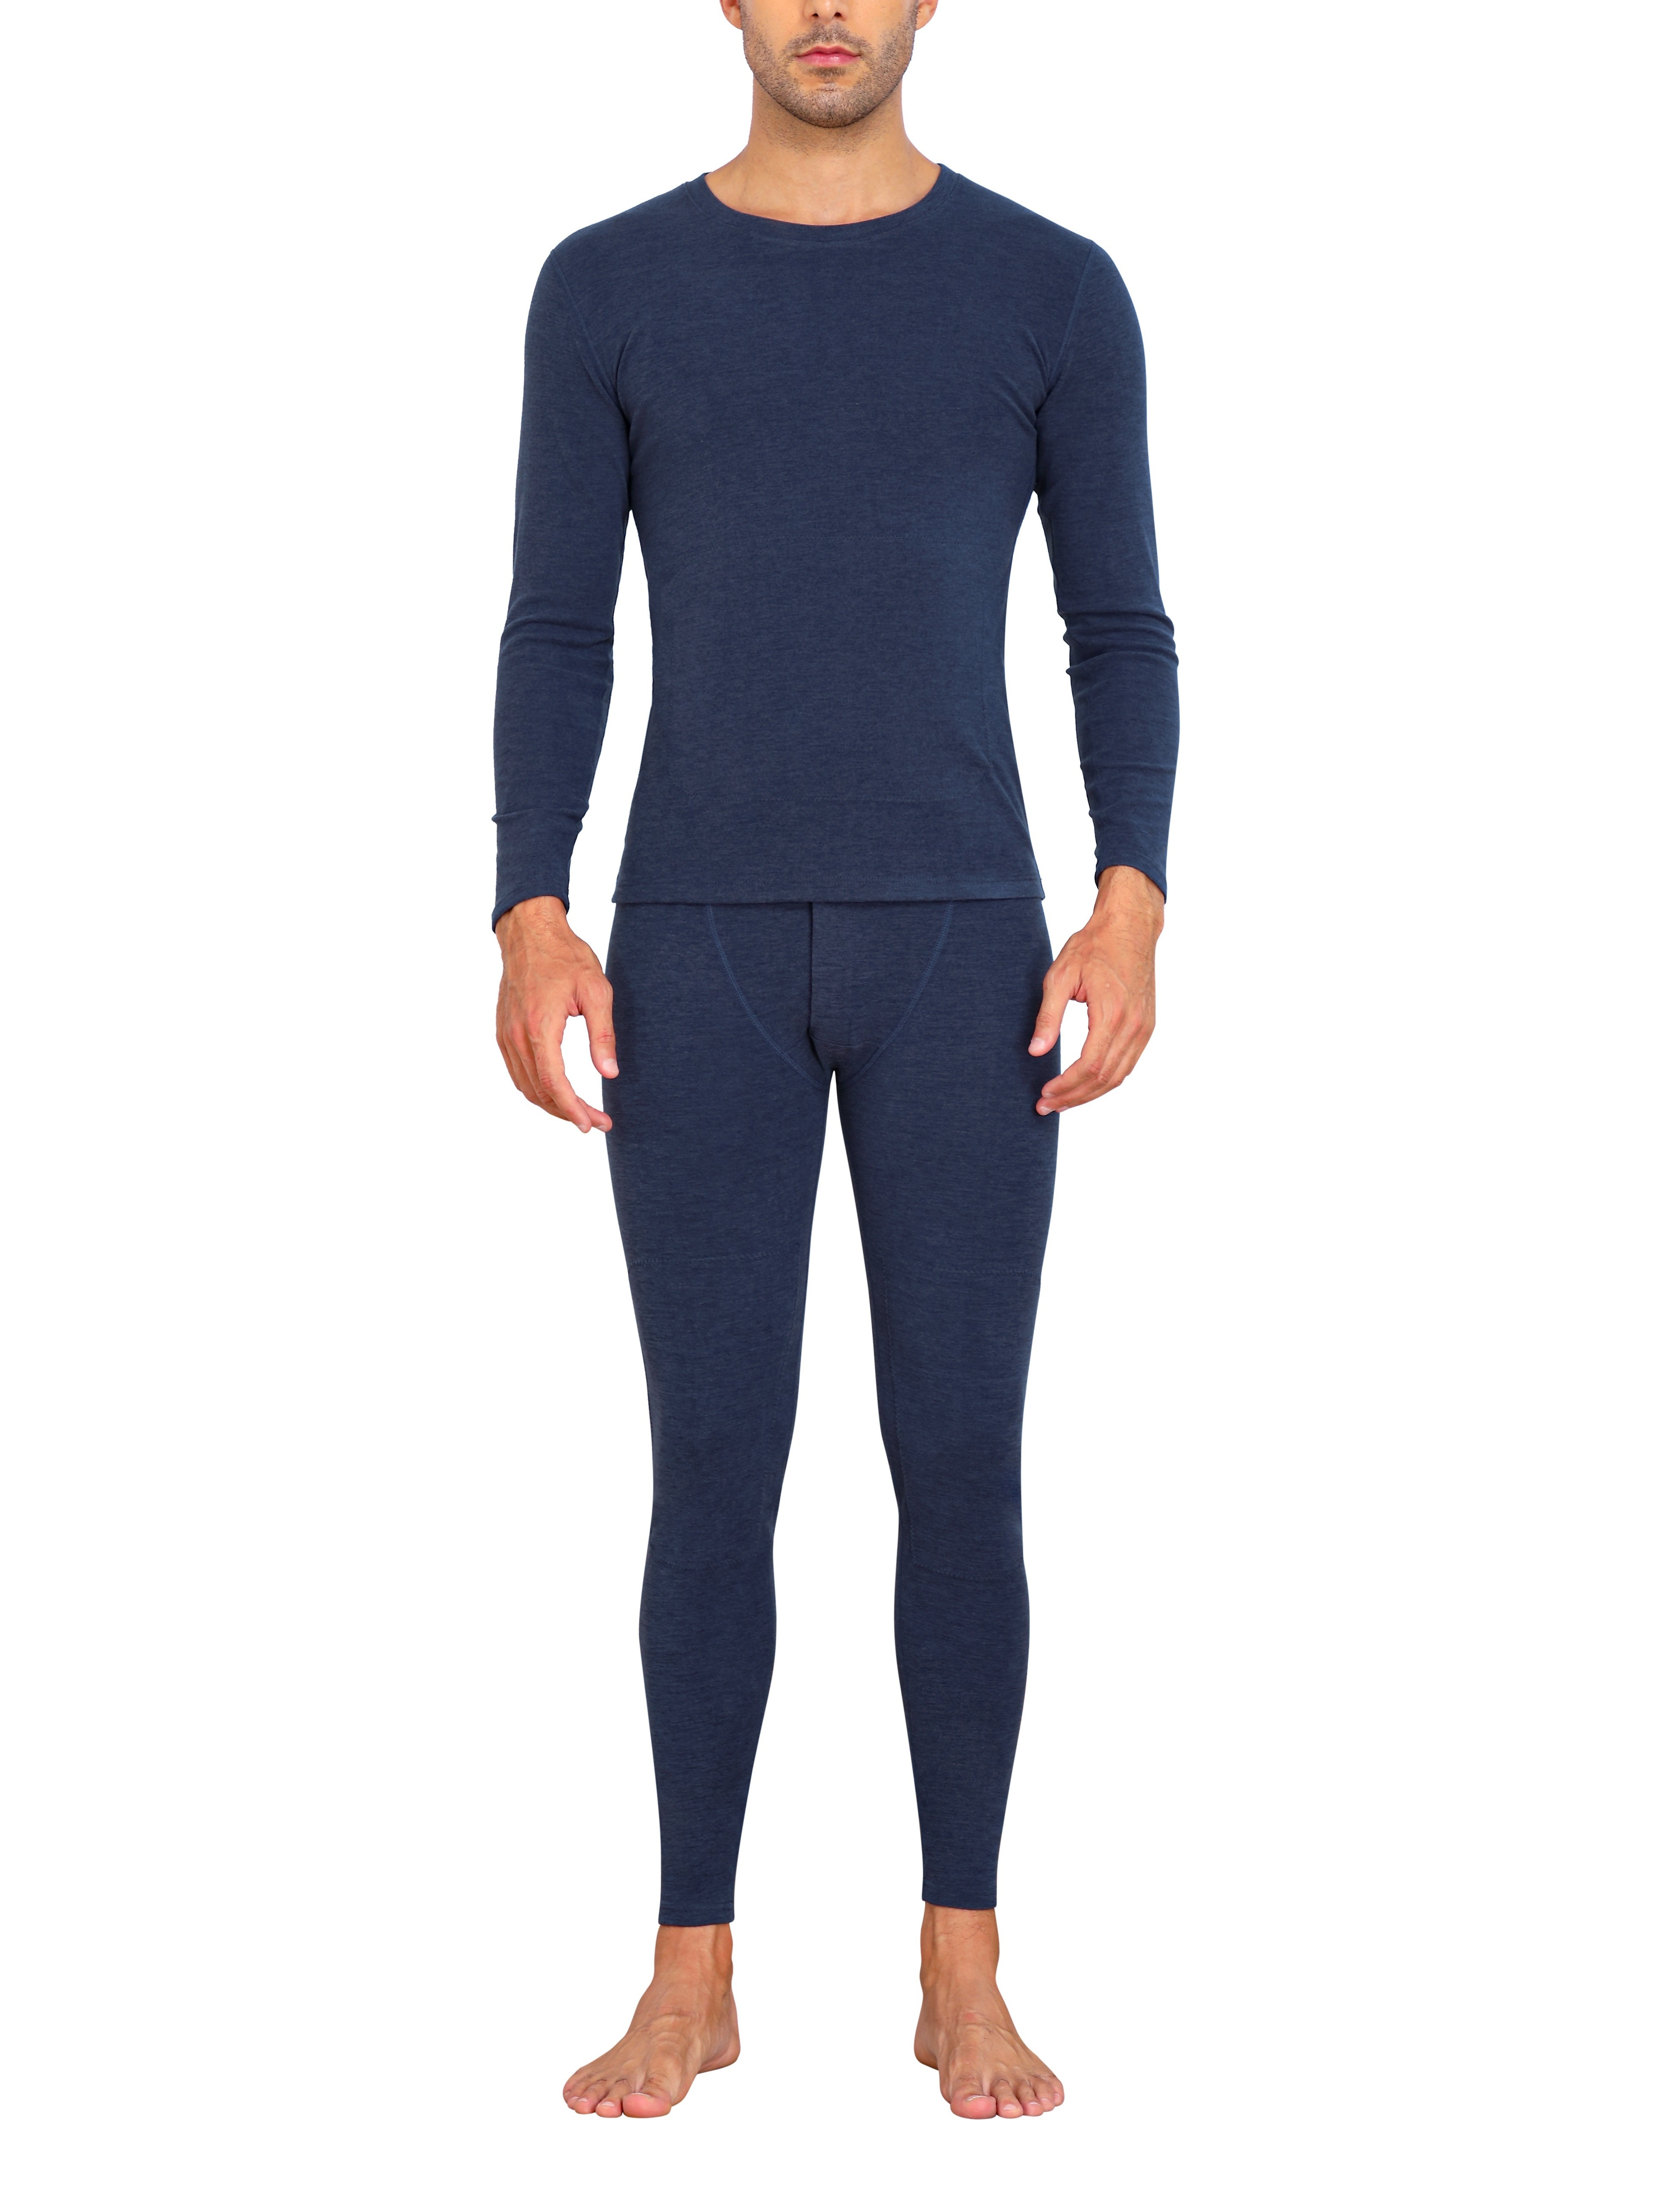 Thermal Underwear for Men (Thermal Long Johns) Sleeve Shirt & Pants Set,  Base Layer w/Leggings Bottoms Ski/Extreme Cold…